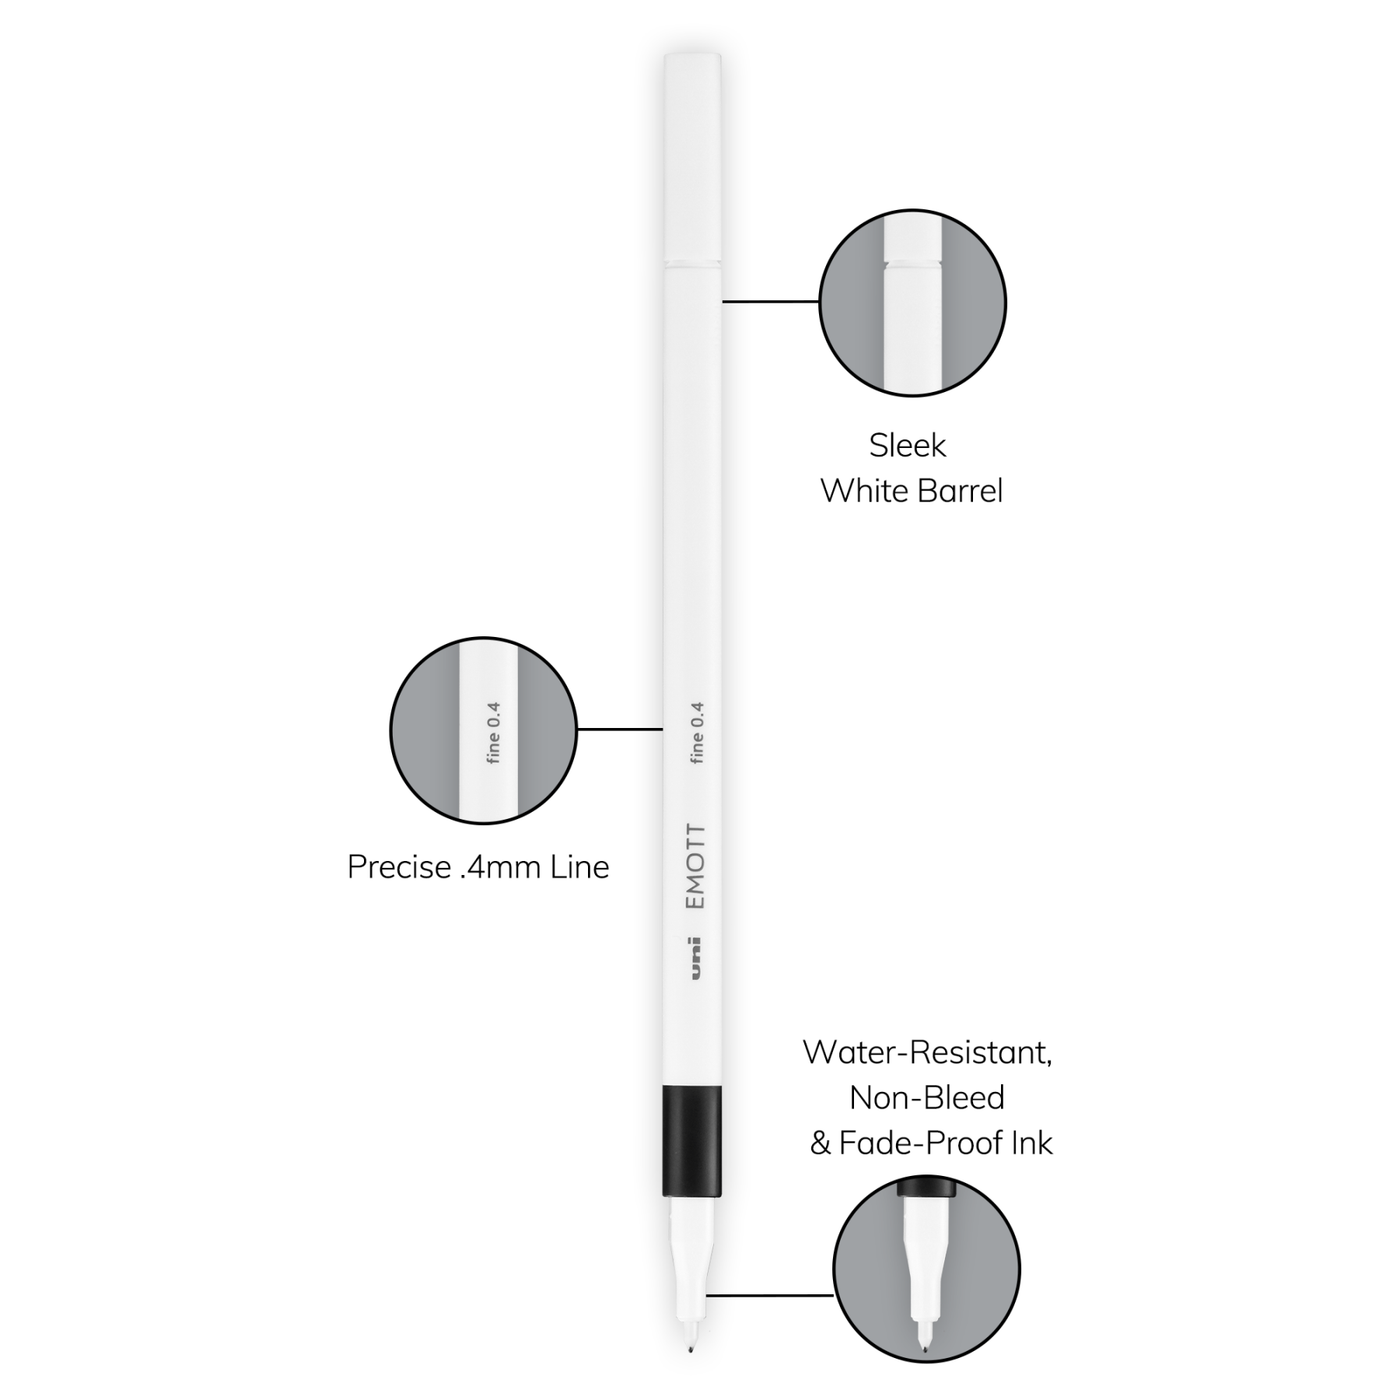 Uni-ball Emott Fine Line Marker Pen